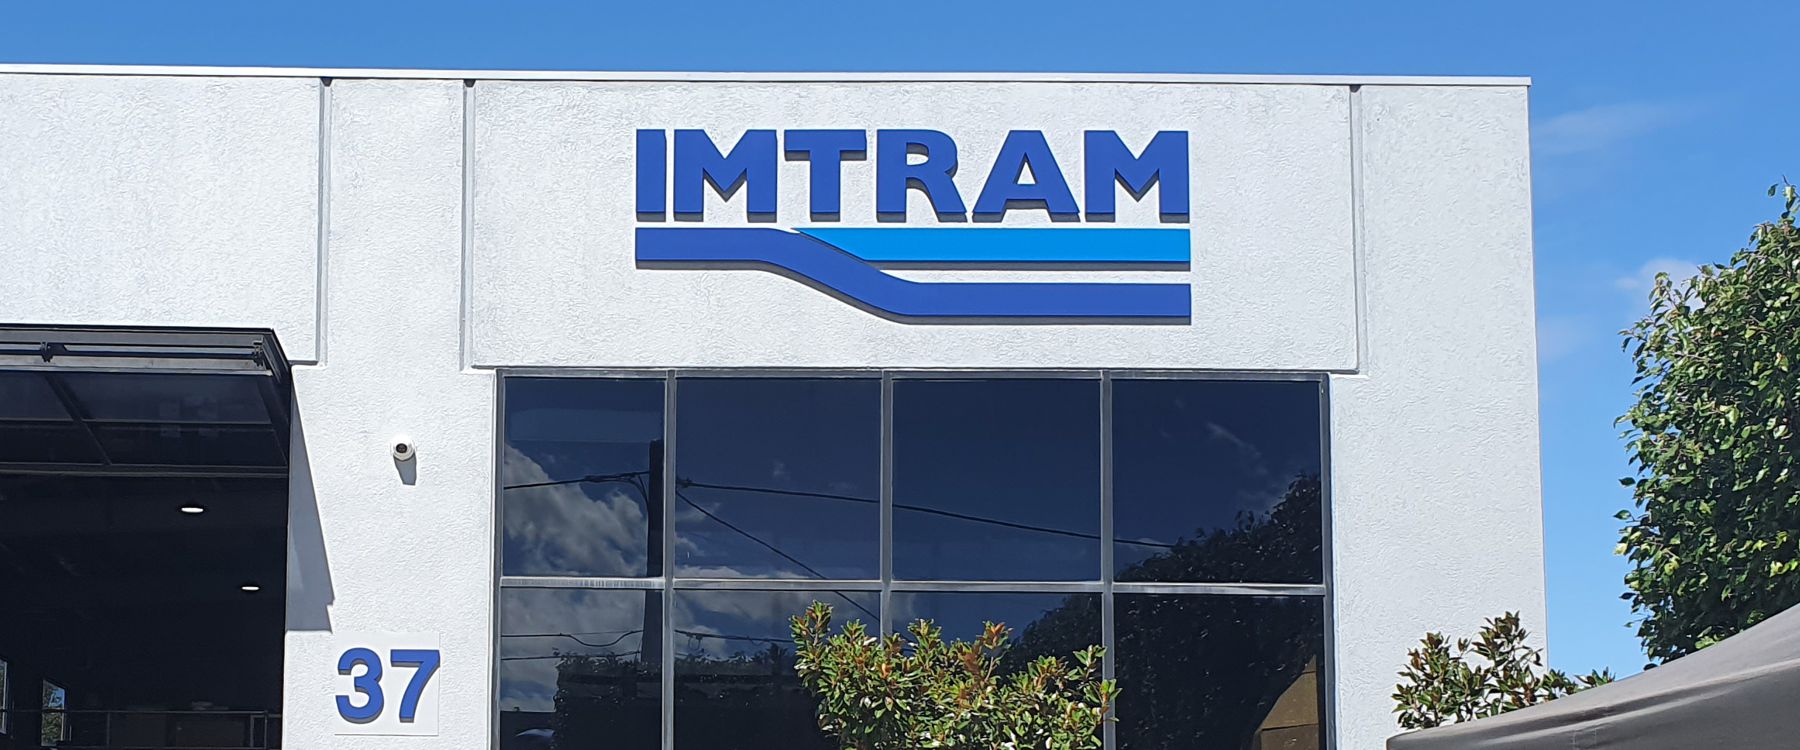 IMTRAM Signage Banner